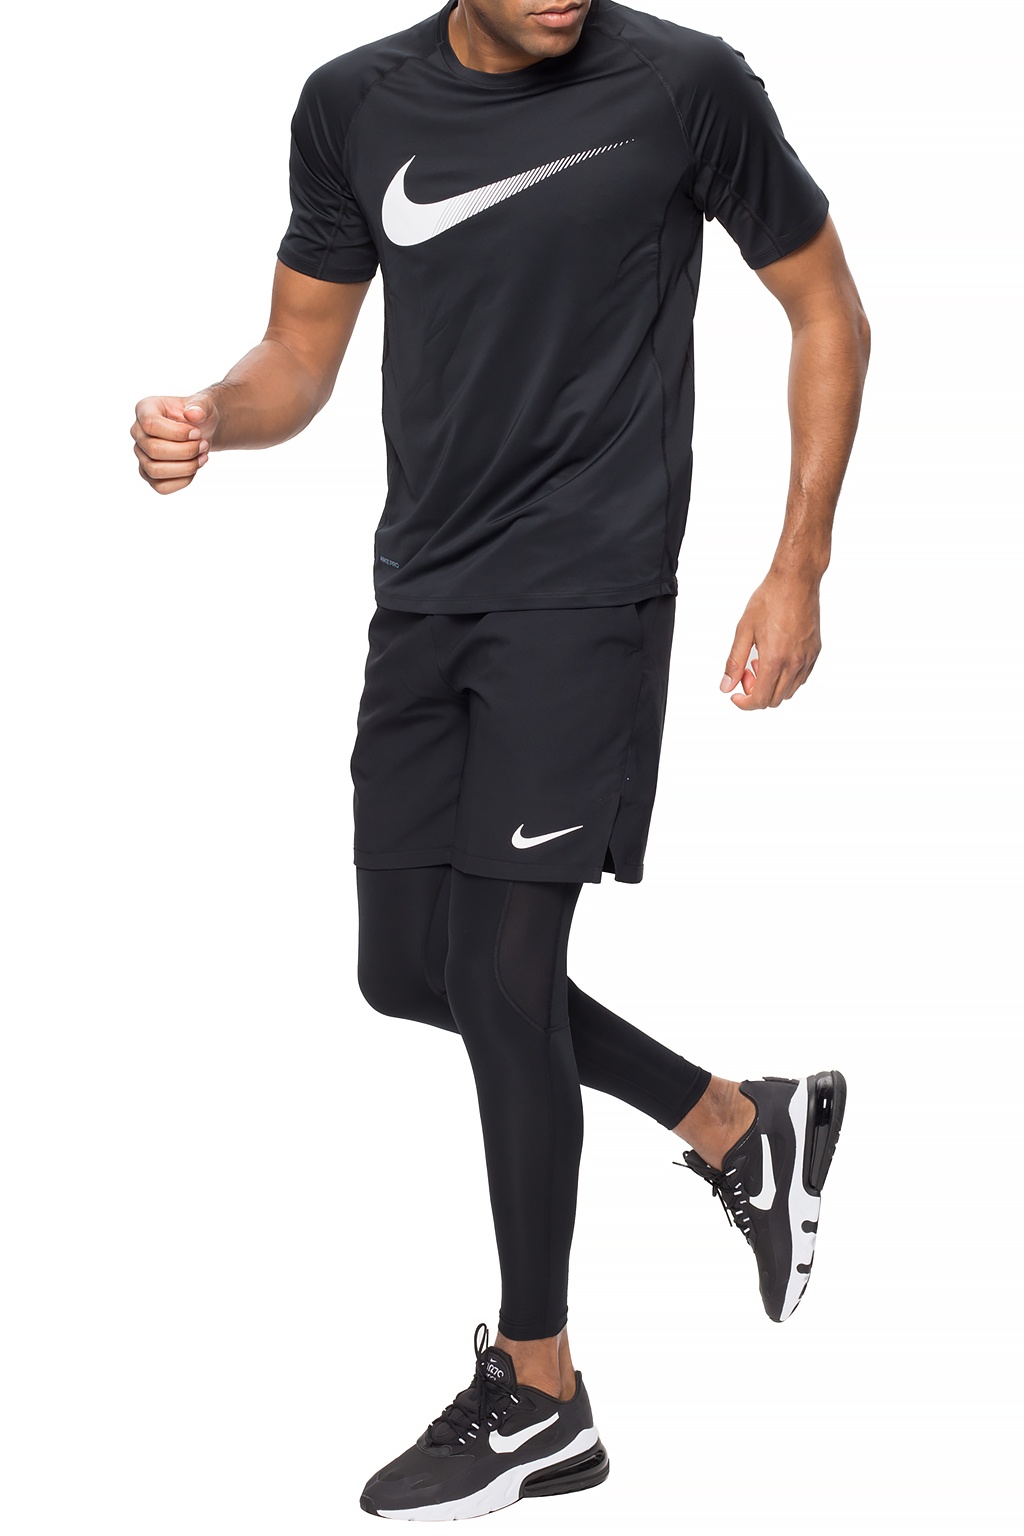 Black Training leggings Nike - Vitkac Italy